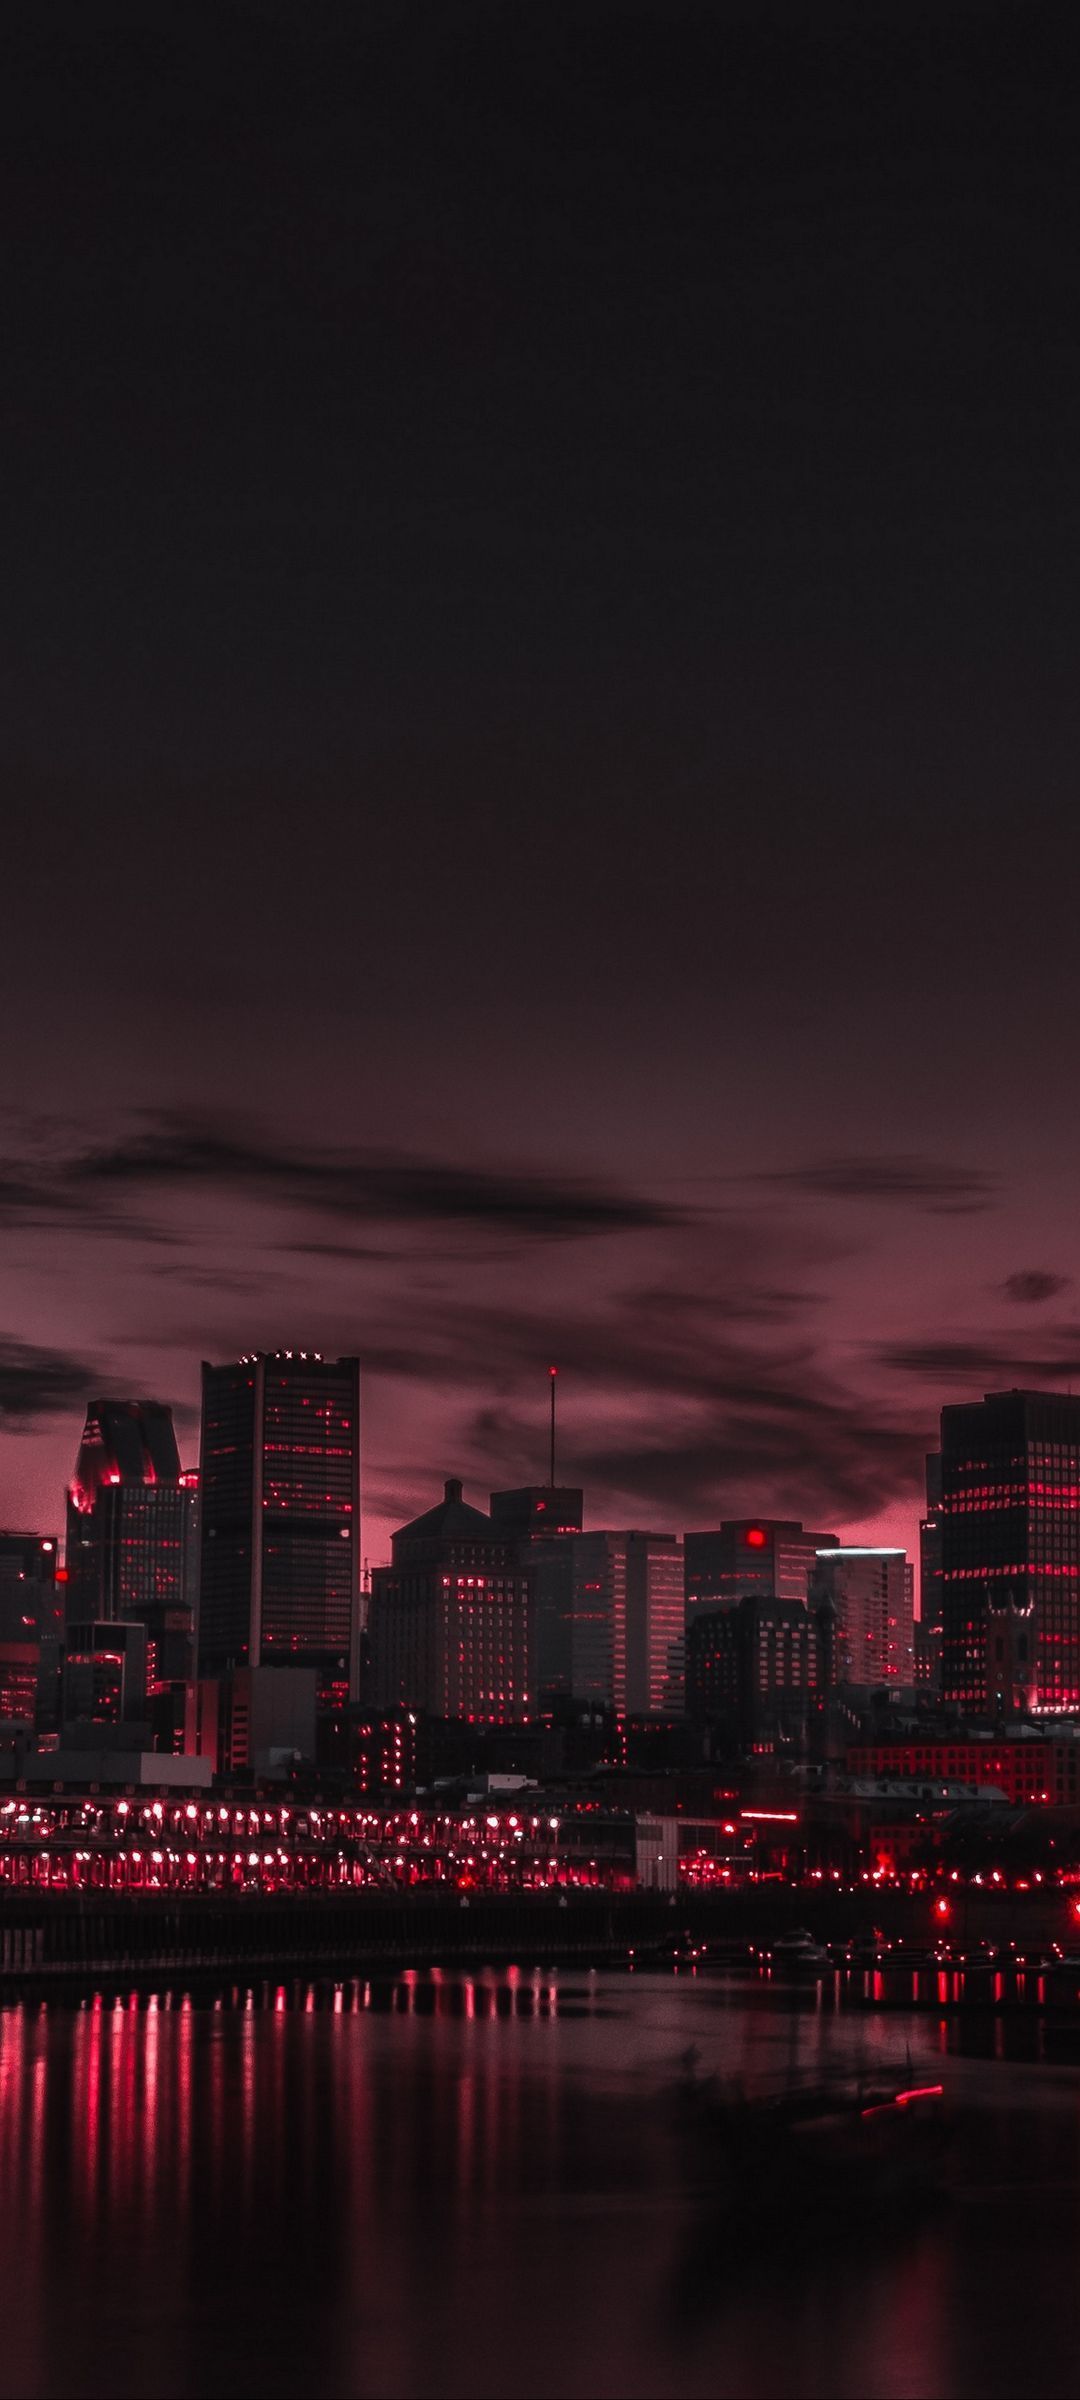 A city skyline at night with lights on - Night, anime city, cityscape, city